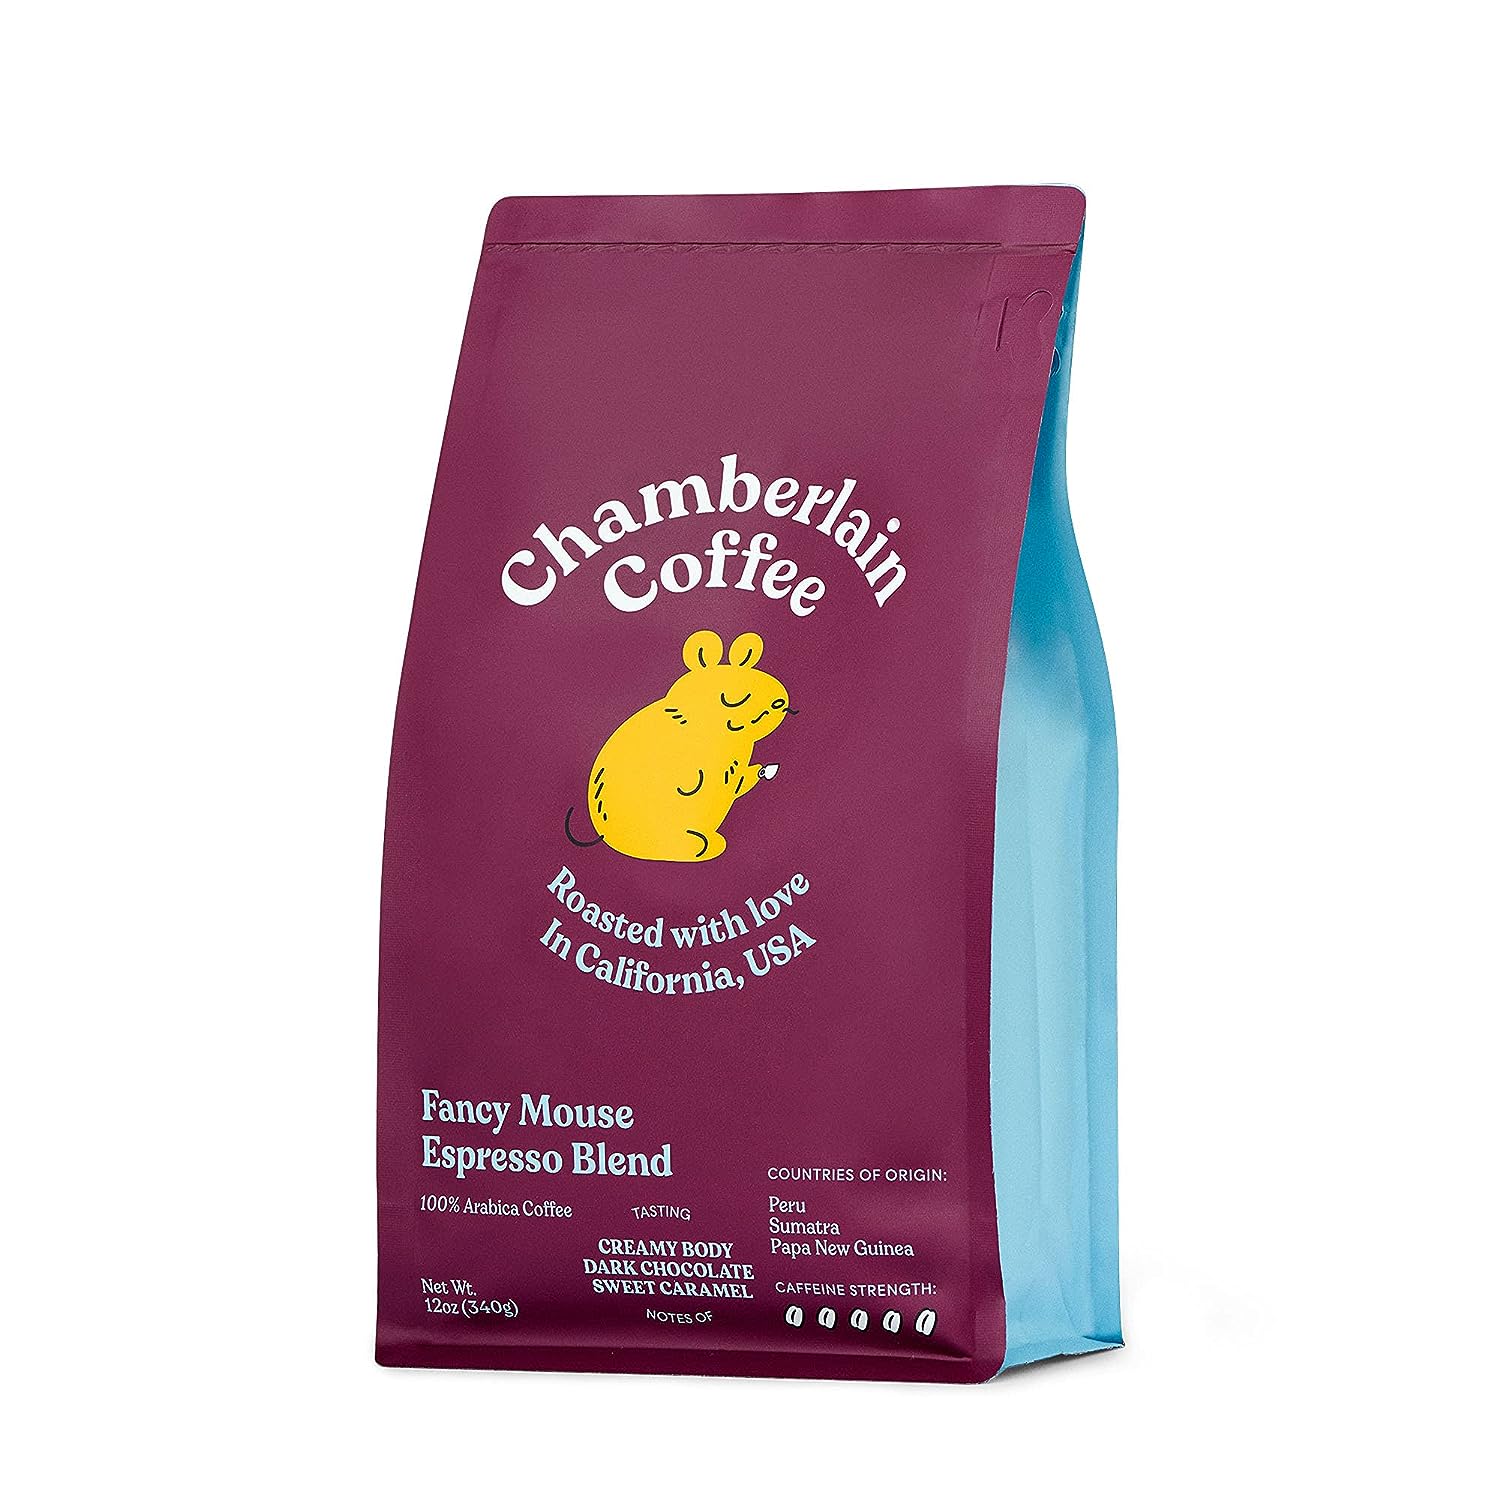 Chamberlain Coffee Fancy Mouse Espresso Blend - Extra Bold, Dark Roast, Organic Coffee, Whole Bean